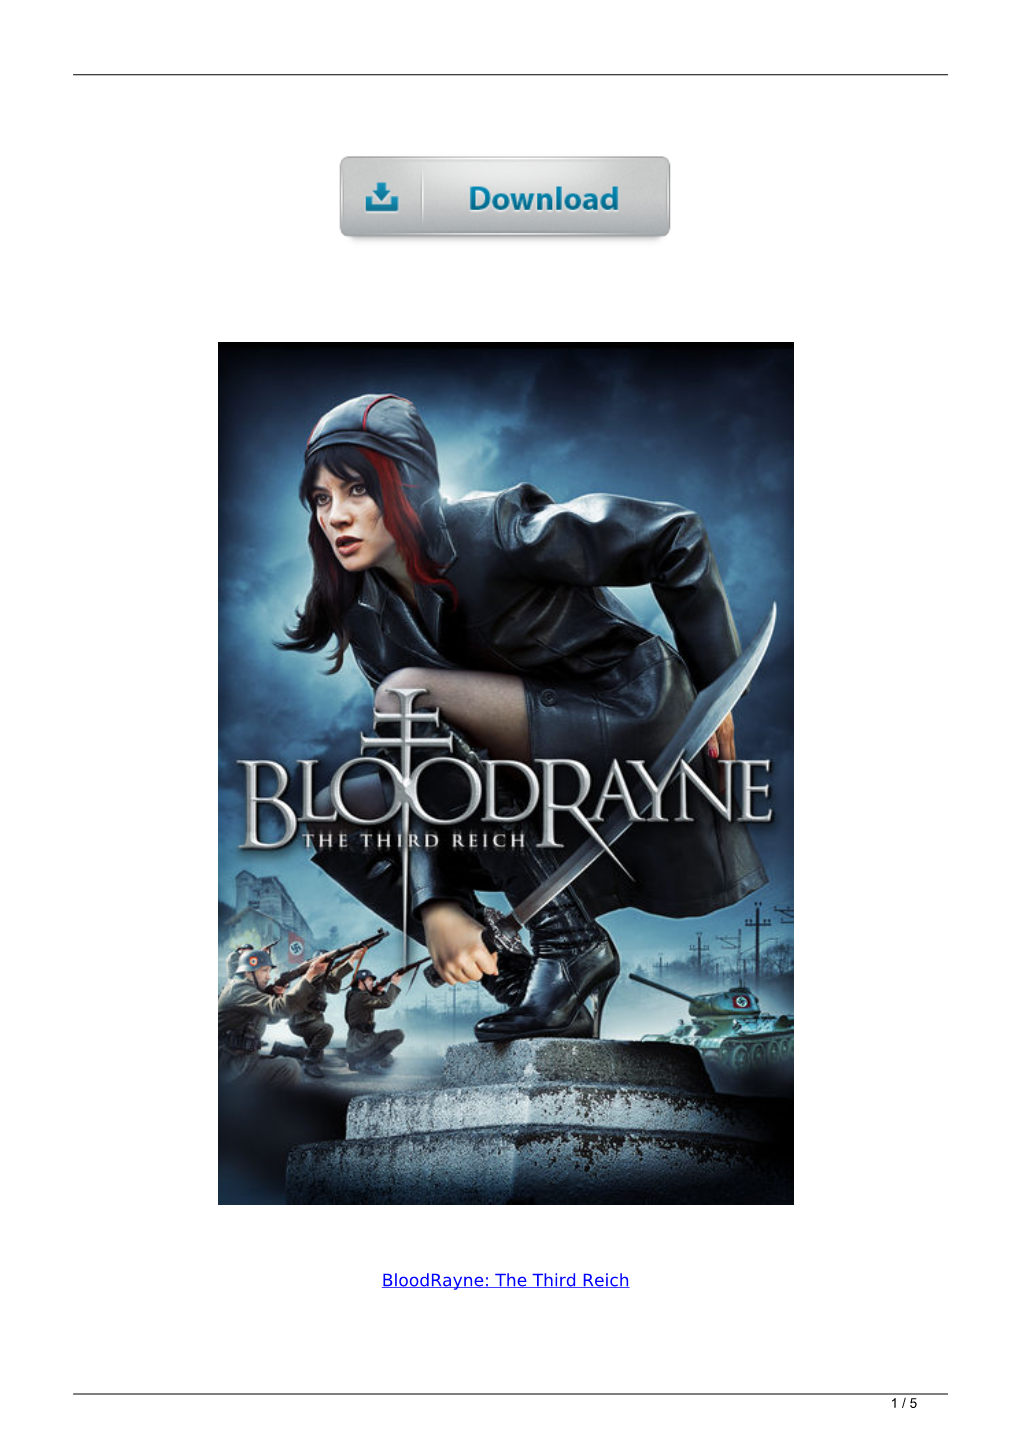 Bloodrayne the Third Reich Film Completo in Italiano Download Gratuito Hd 720P